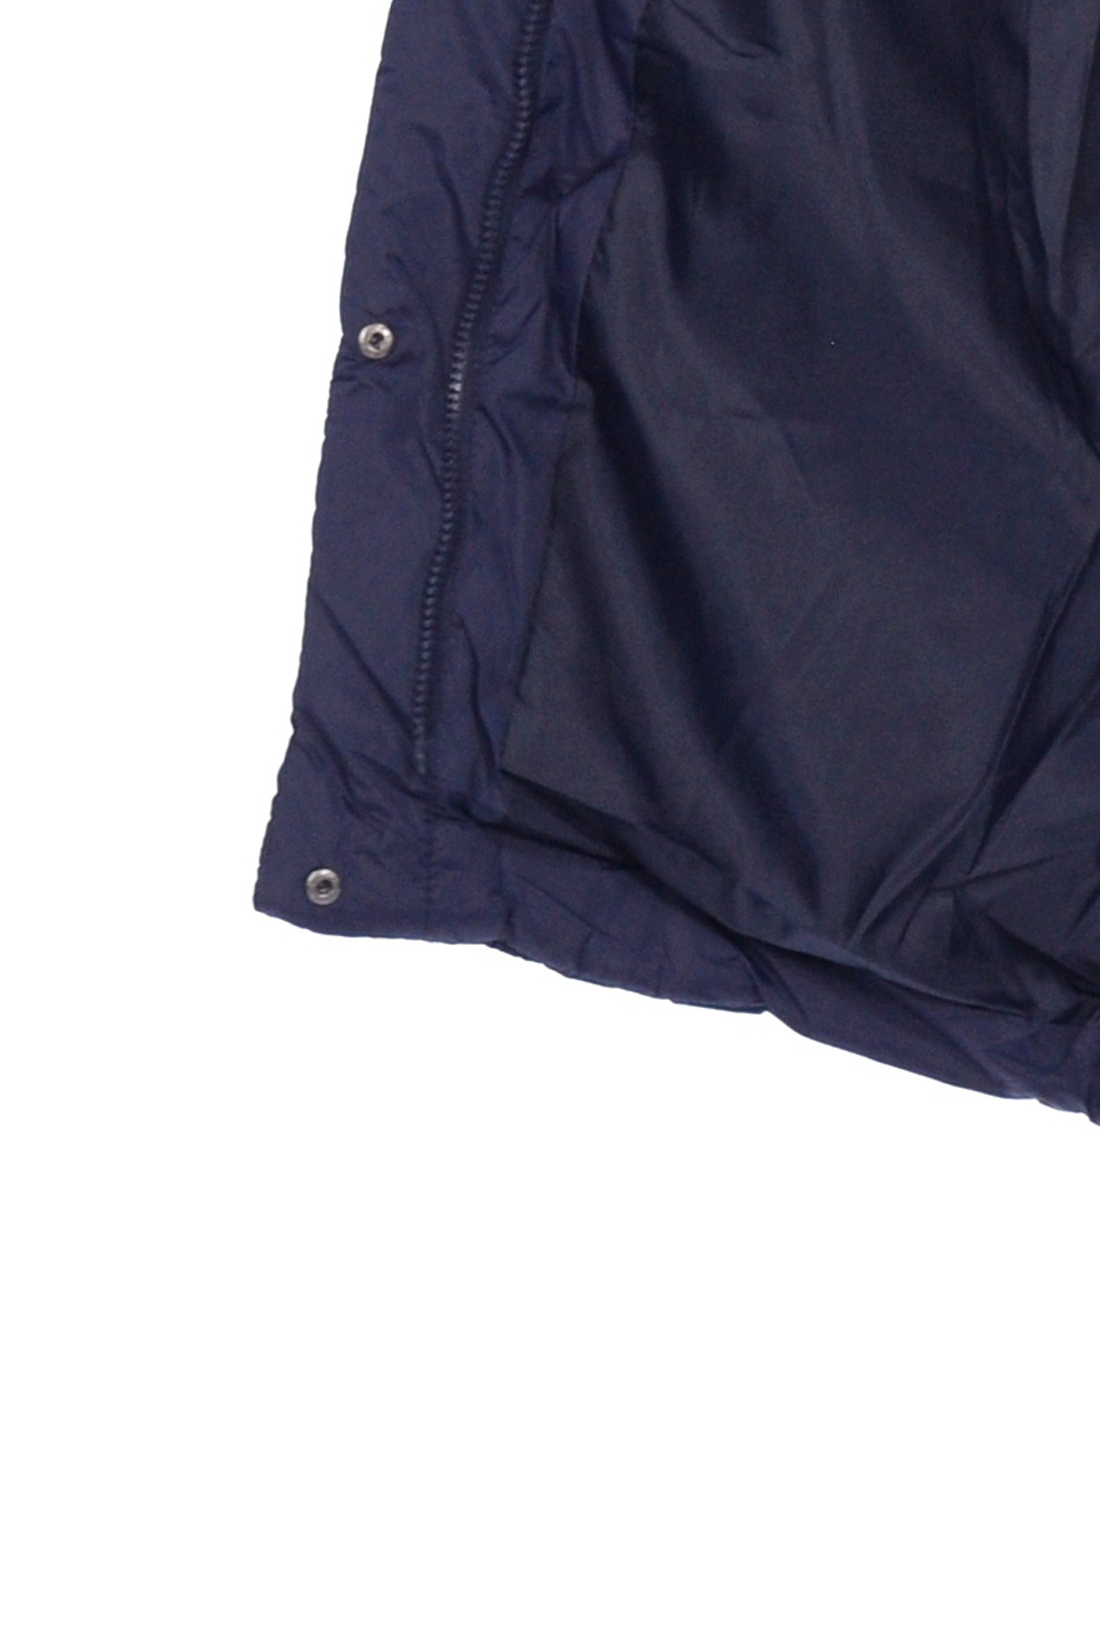 Куртка-парка с крупной простёжкой (арт. baon B039551), размер L, цвет синий Куртка-парка с крупной простёжкой (арт. baon B039551) - фото 4